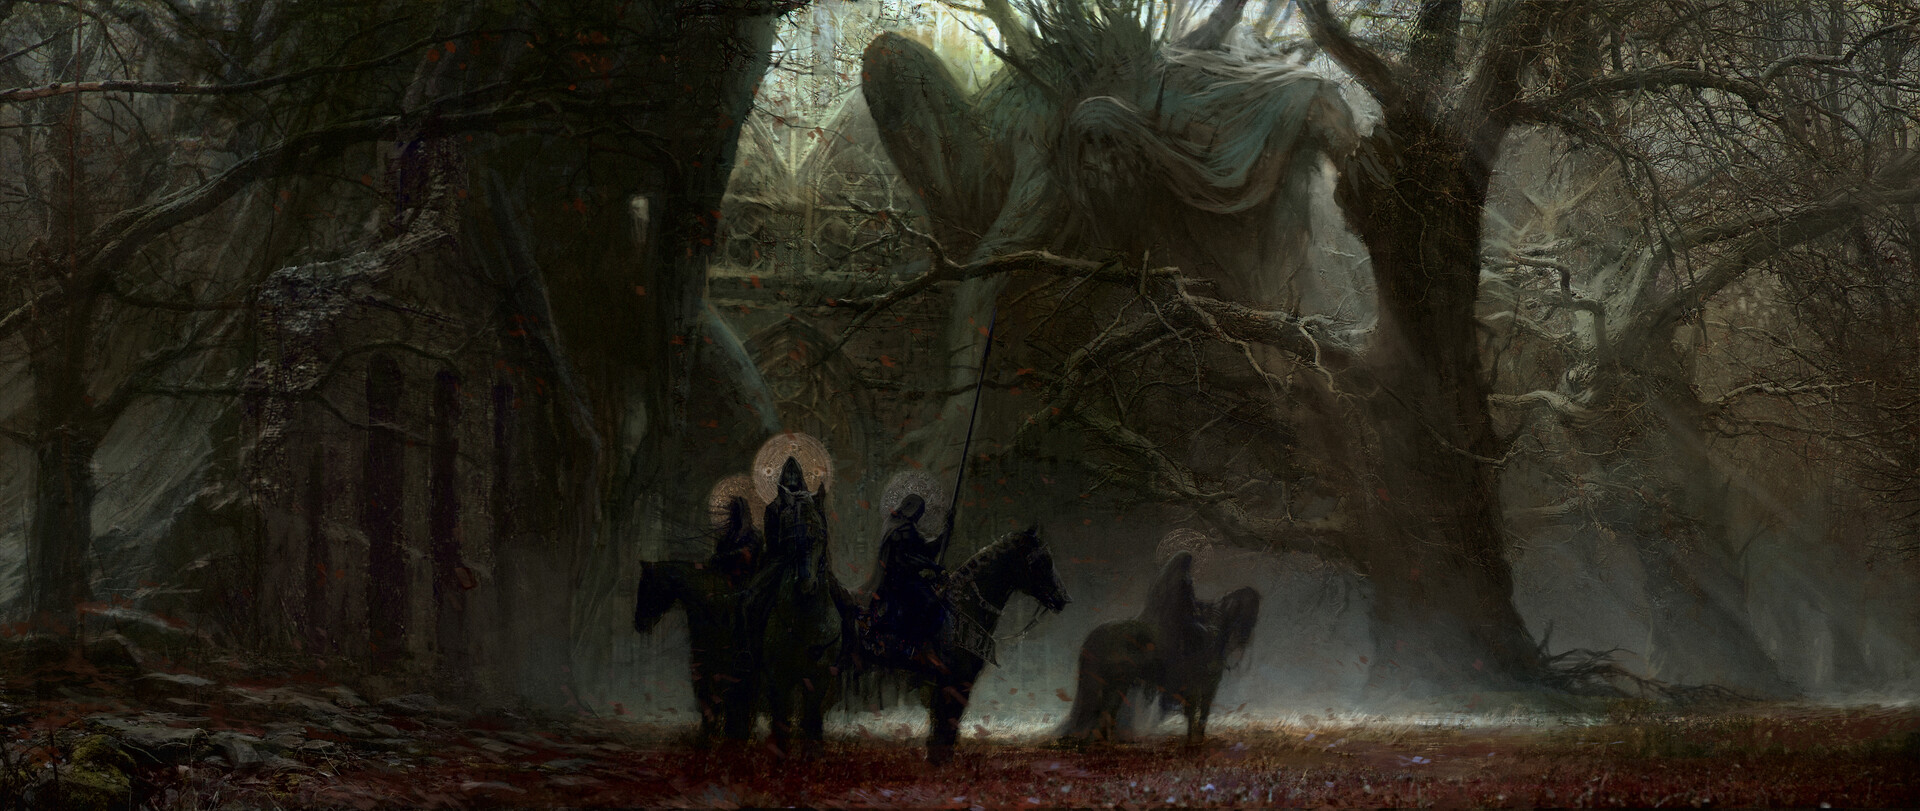 Artem Demura Dark Digital Art Fantasy Art Horse Four Horsemen Of The Apocalypse Trees Forest Ruins S 1920x811